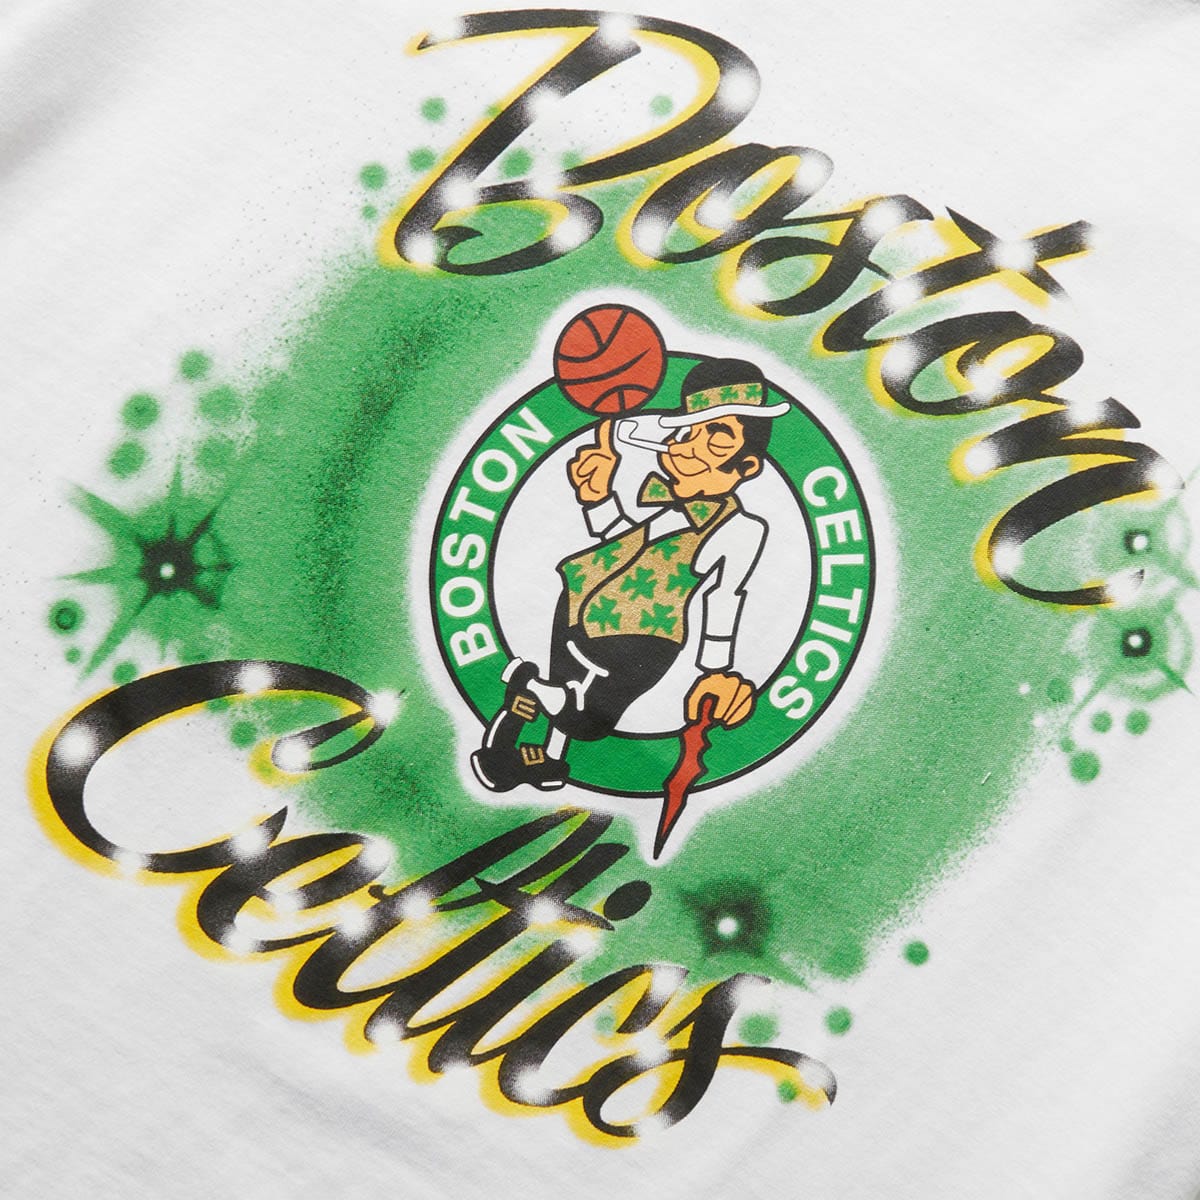 Boston Celtics T-Shirts in Boston Celtics Team Shop 